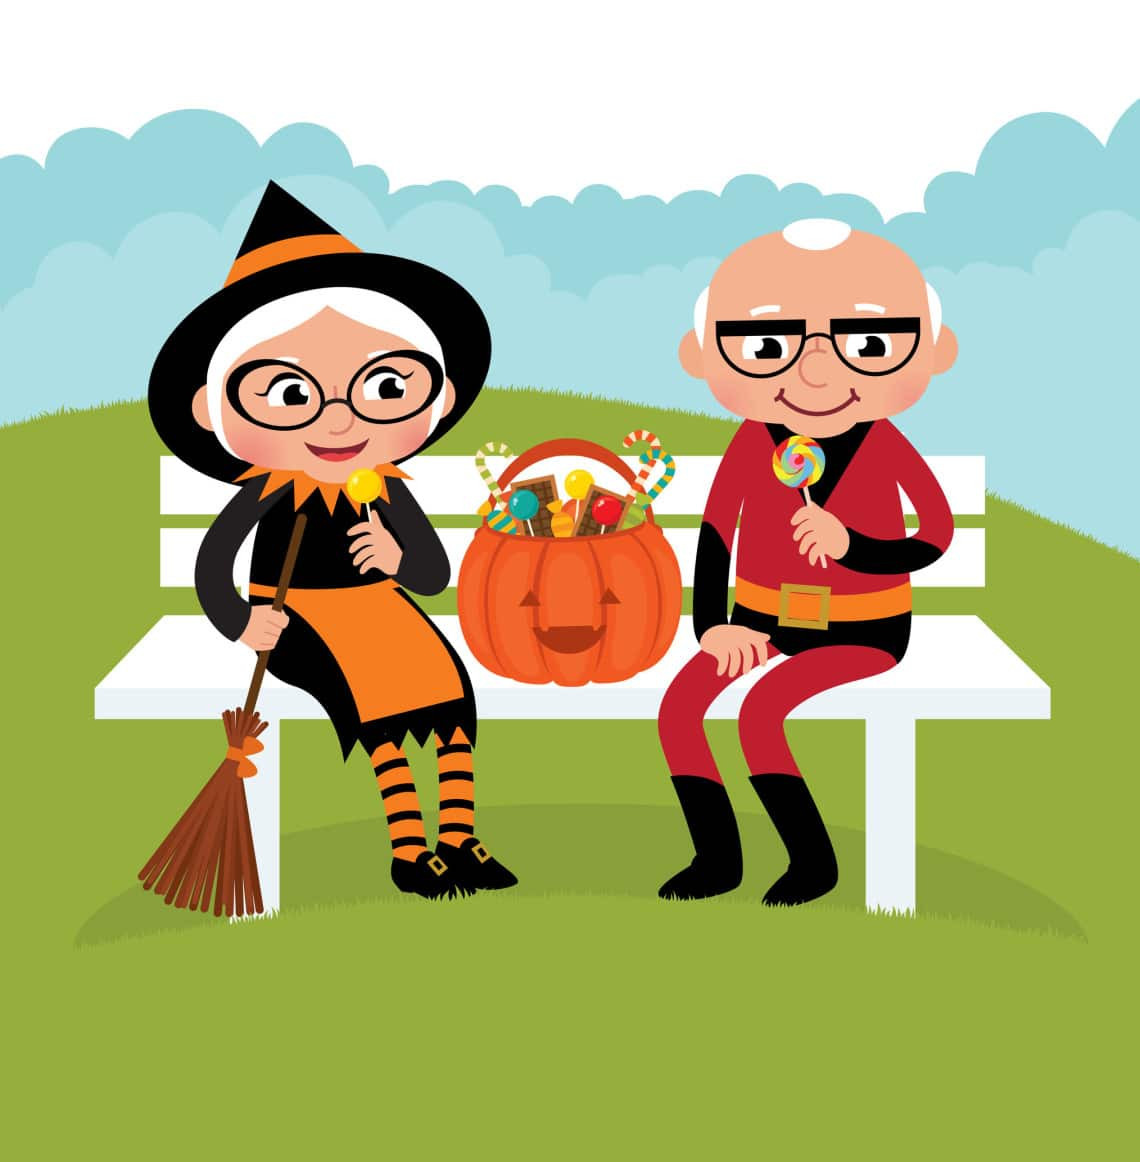 Halloween Party Ideas For Seniors
 Fun Halloween Ideas for Seniors All About Seniors